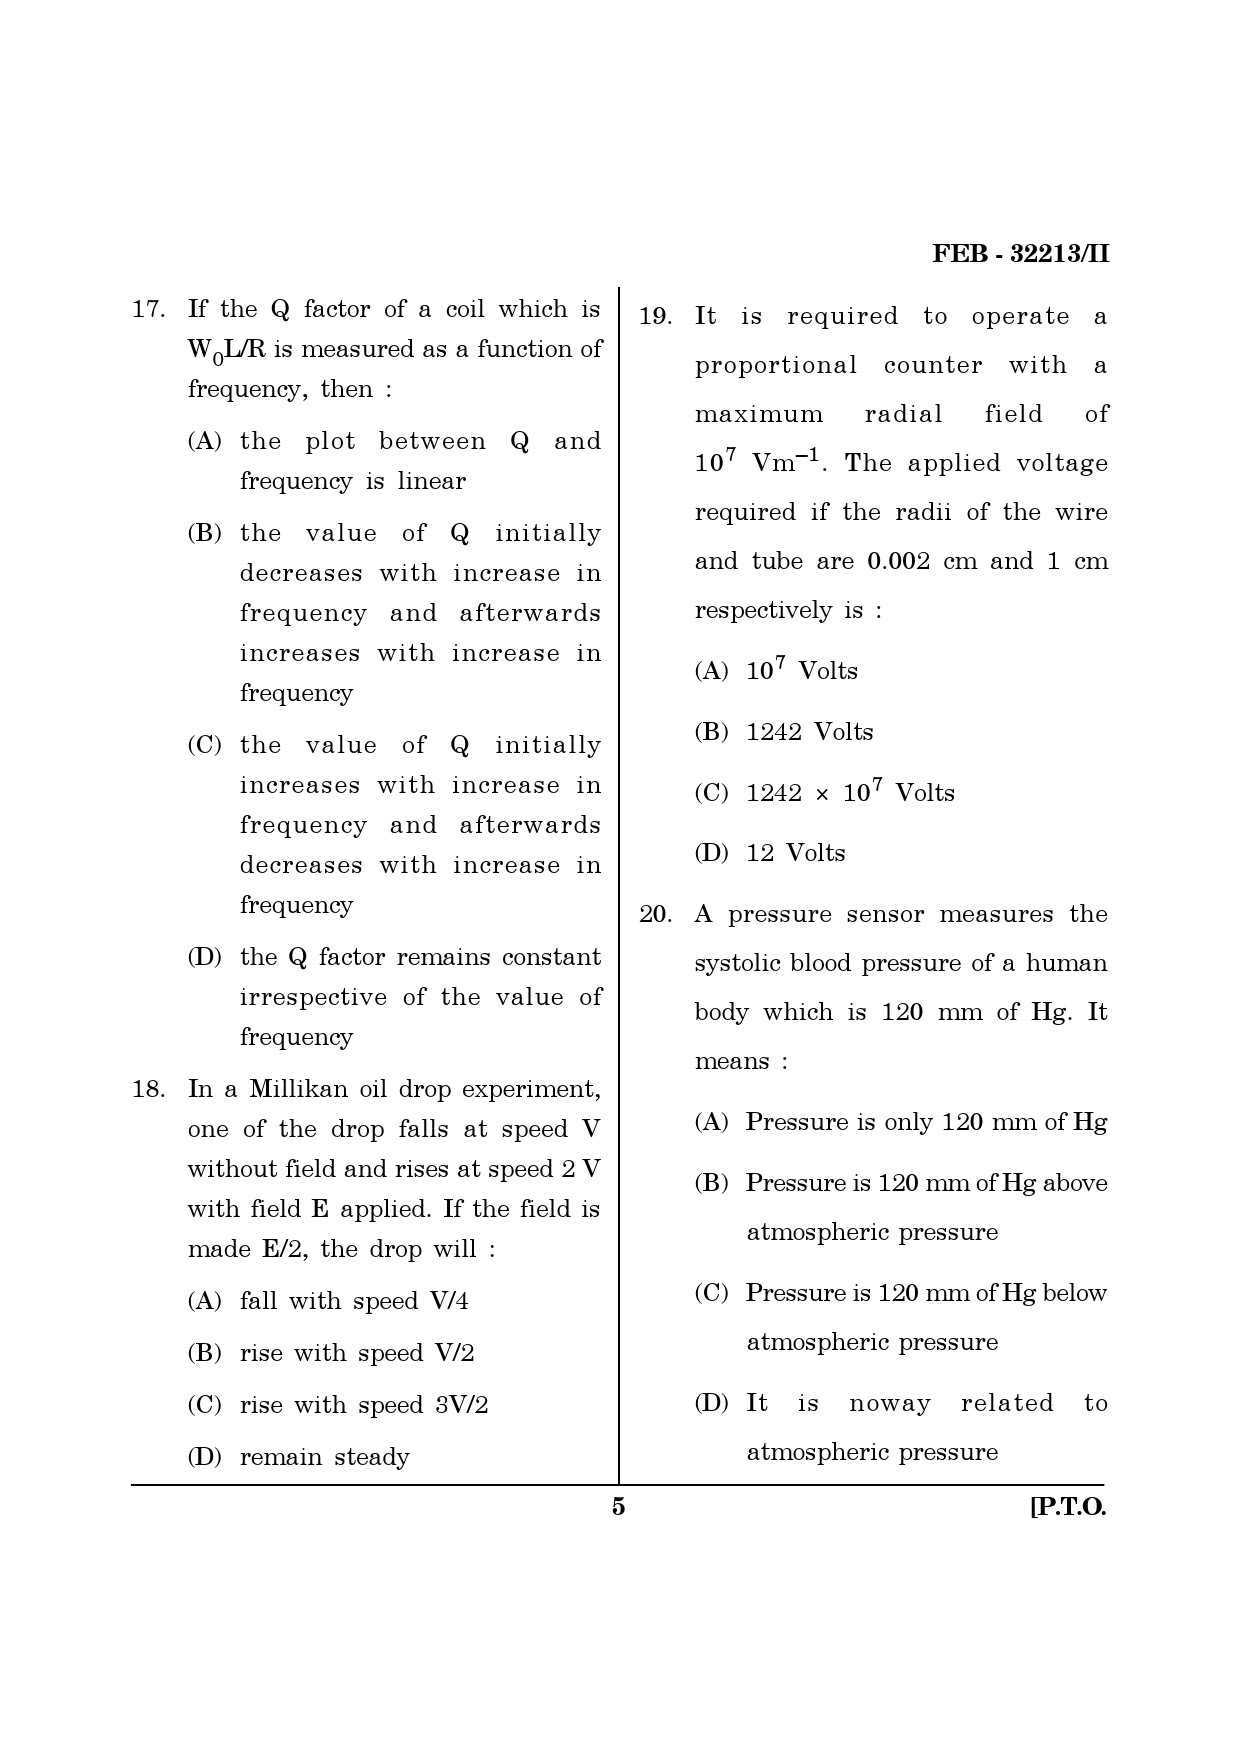 Maharashtra SET Physics Question Paper II February 2013 5